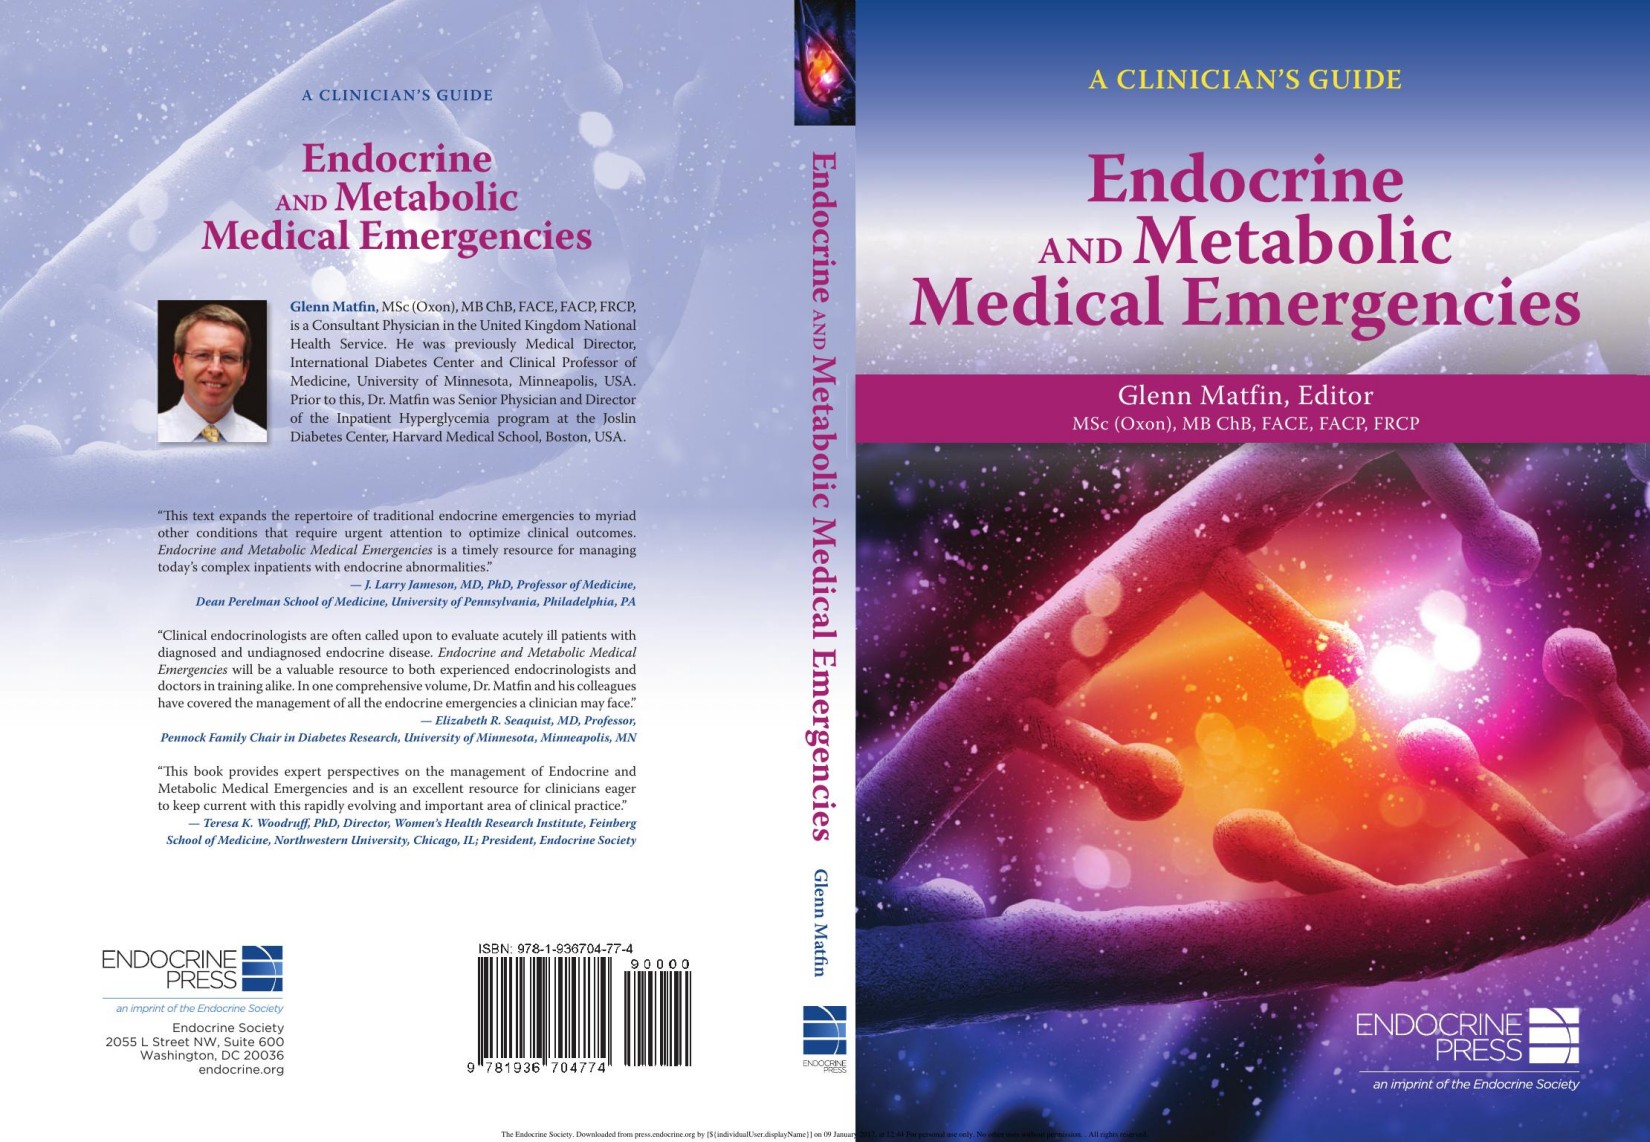 ENDOCRINE AND METABOLIC MEDICAL EMERGENCY 2014